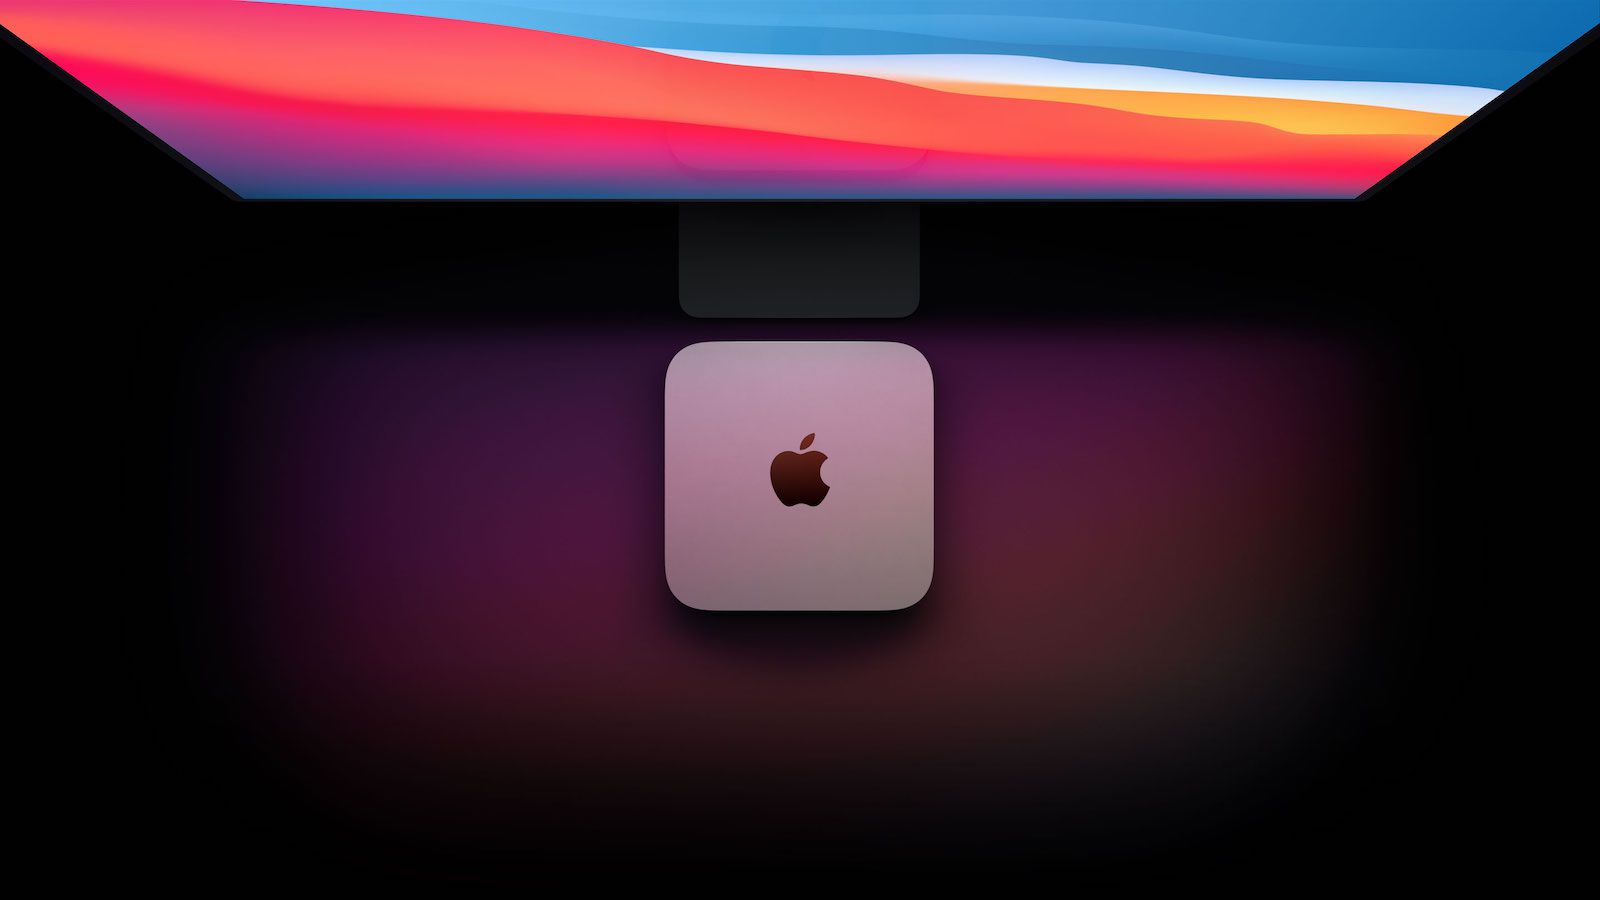 Unreleased Mac Mini Spotted in Latest Studio Display Firmware